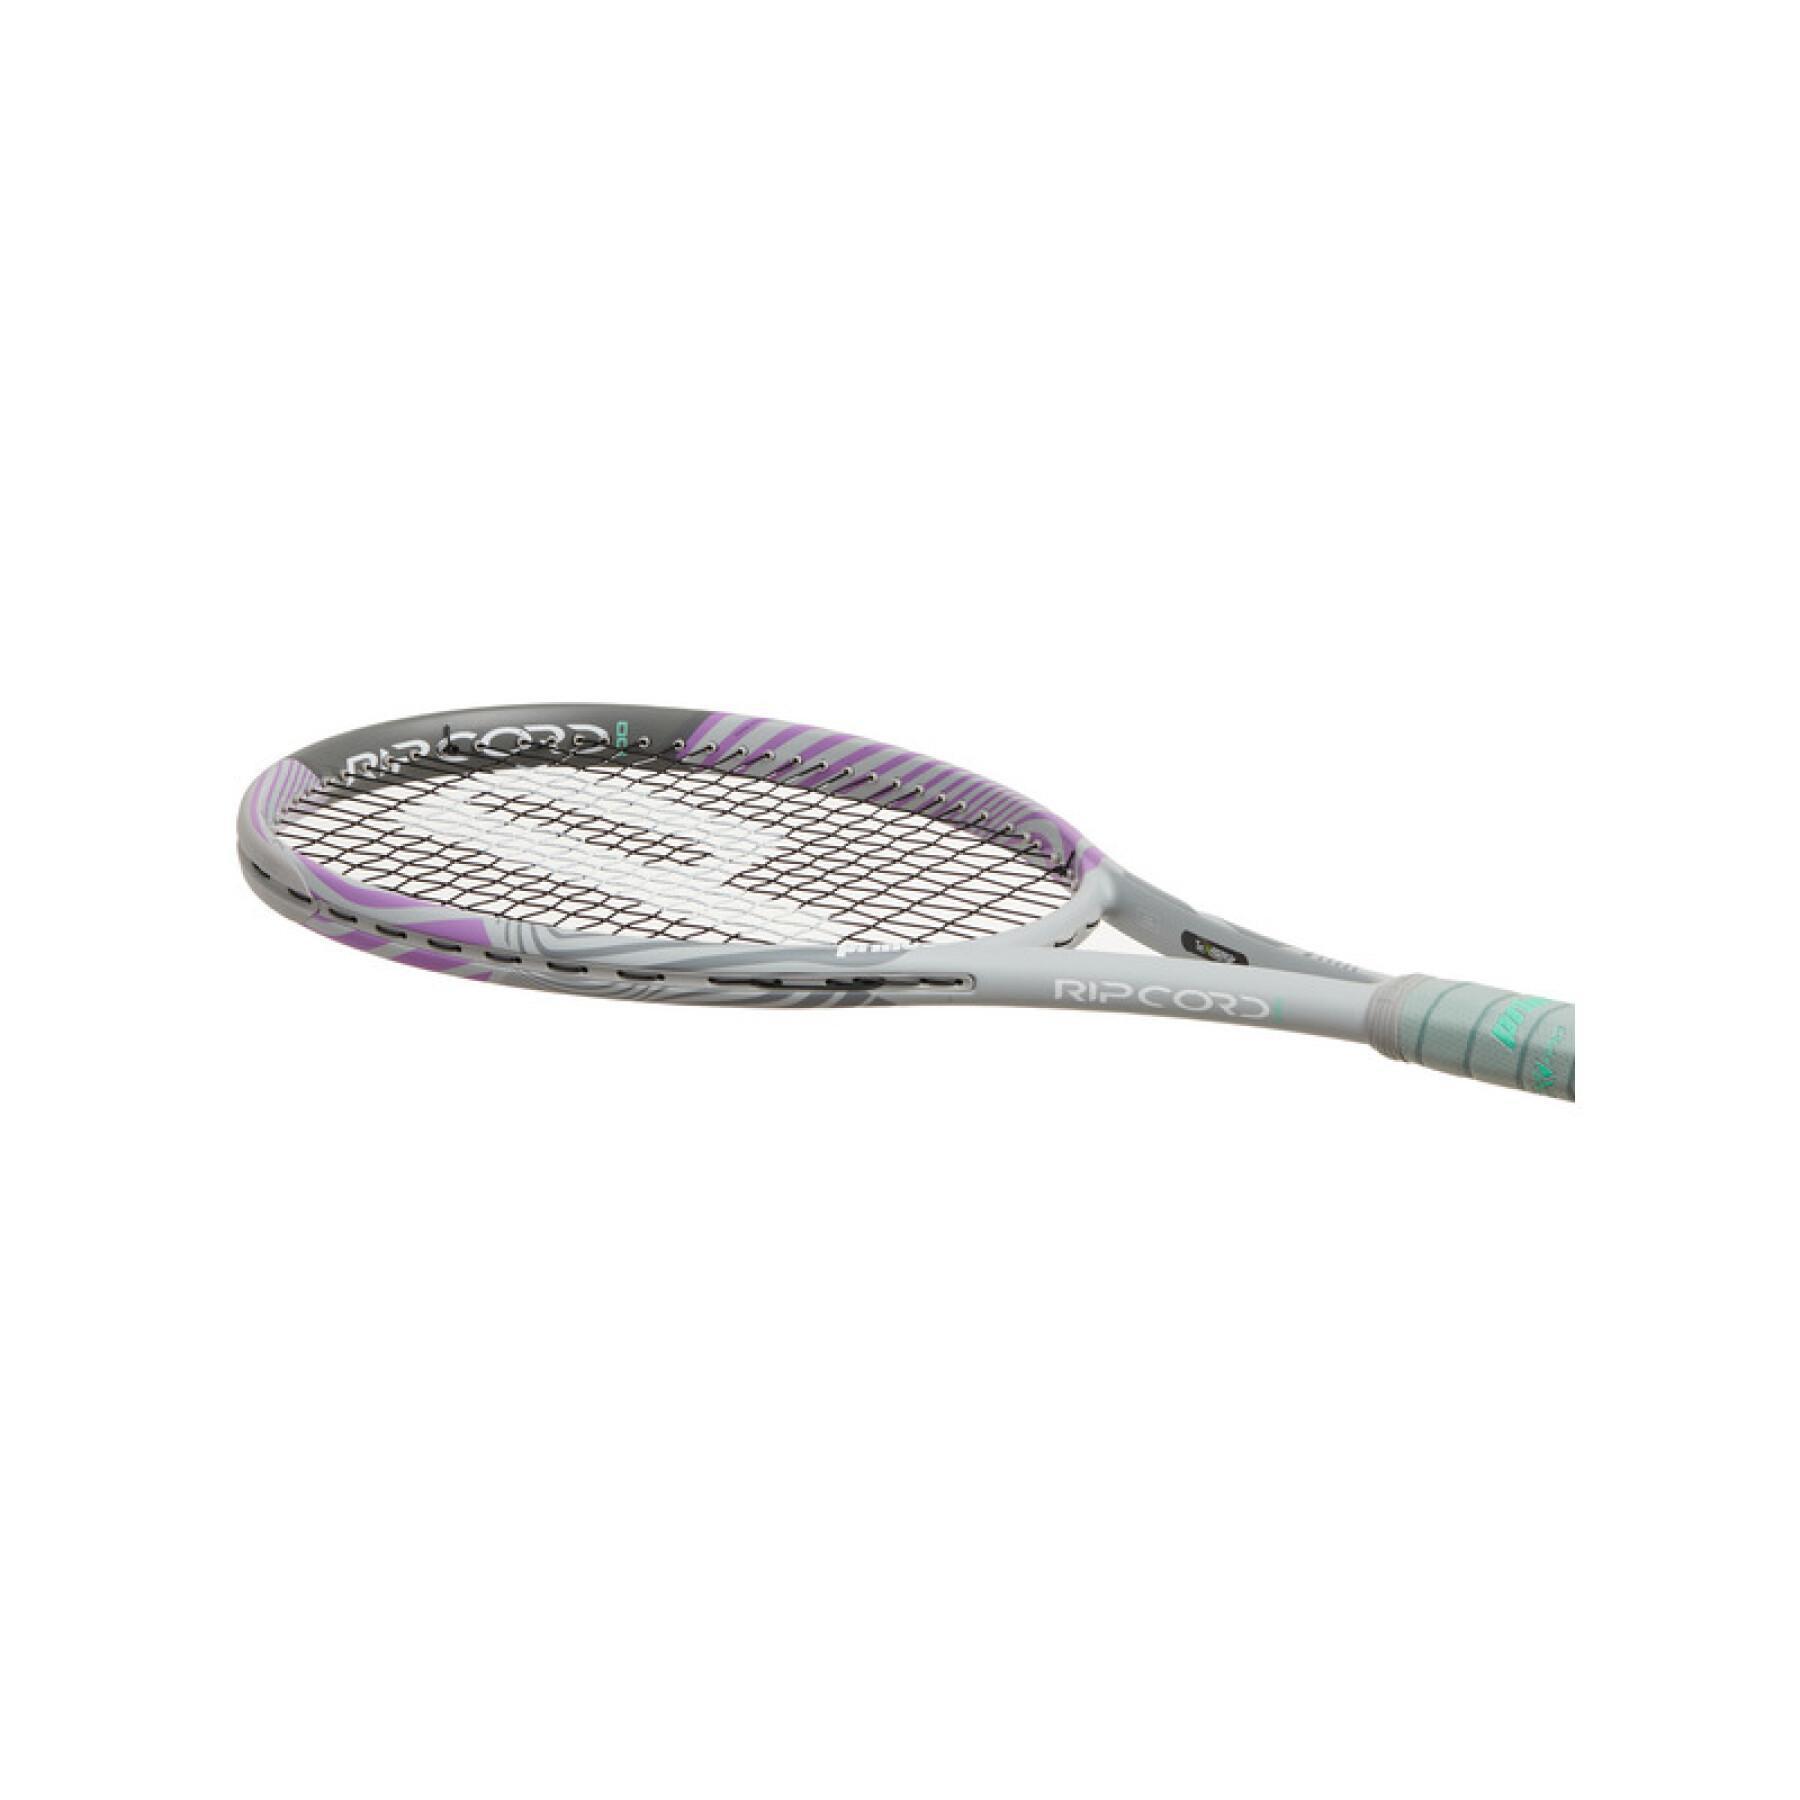 Raqueta de tenis Prince Ripcord 265